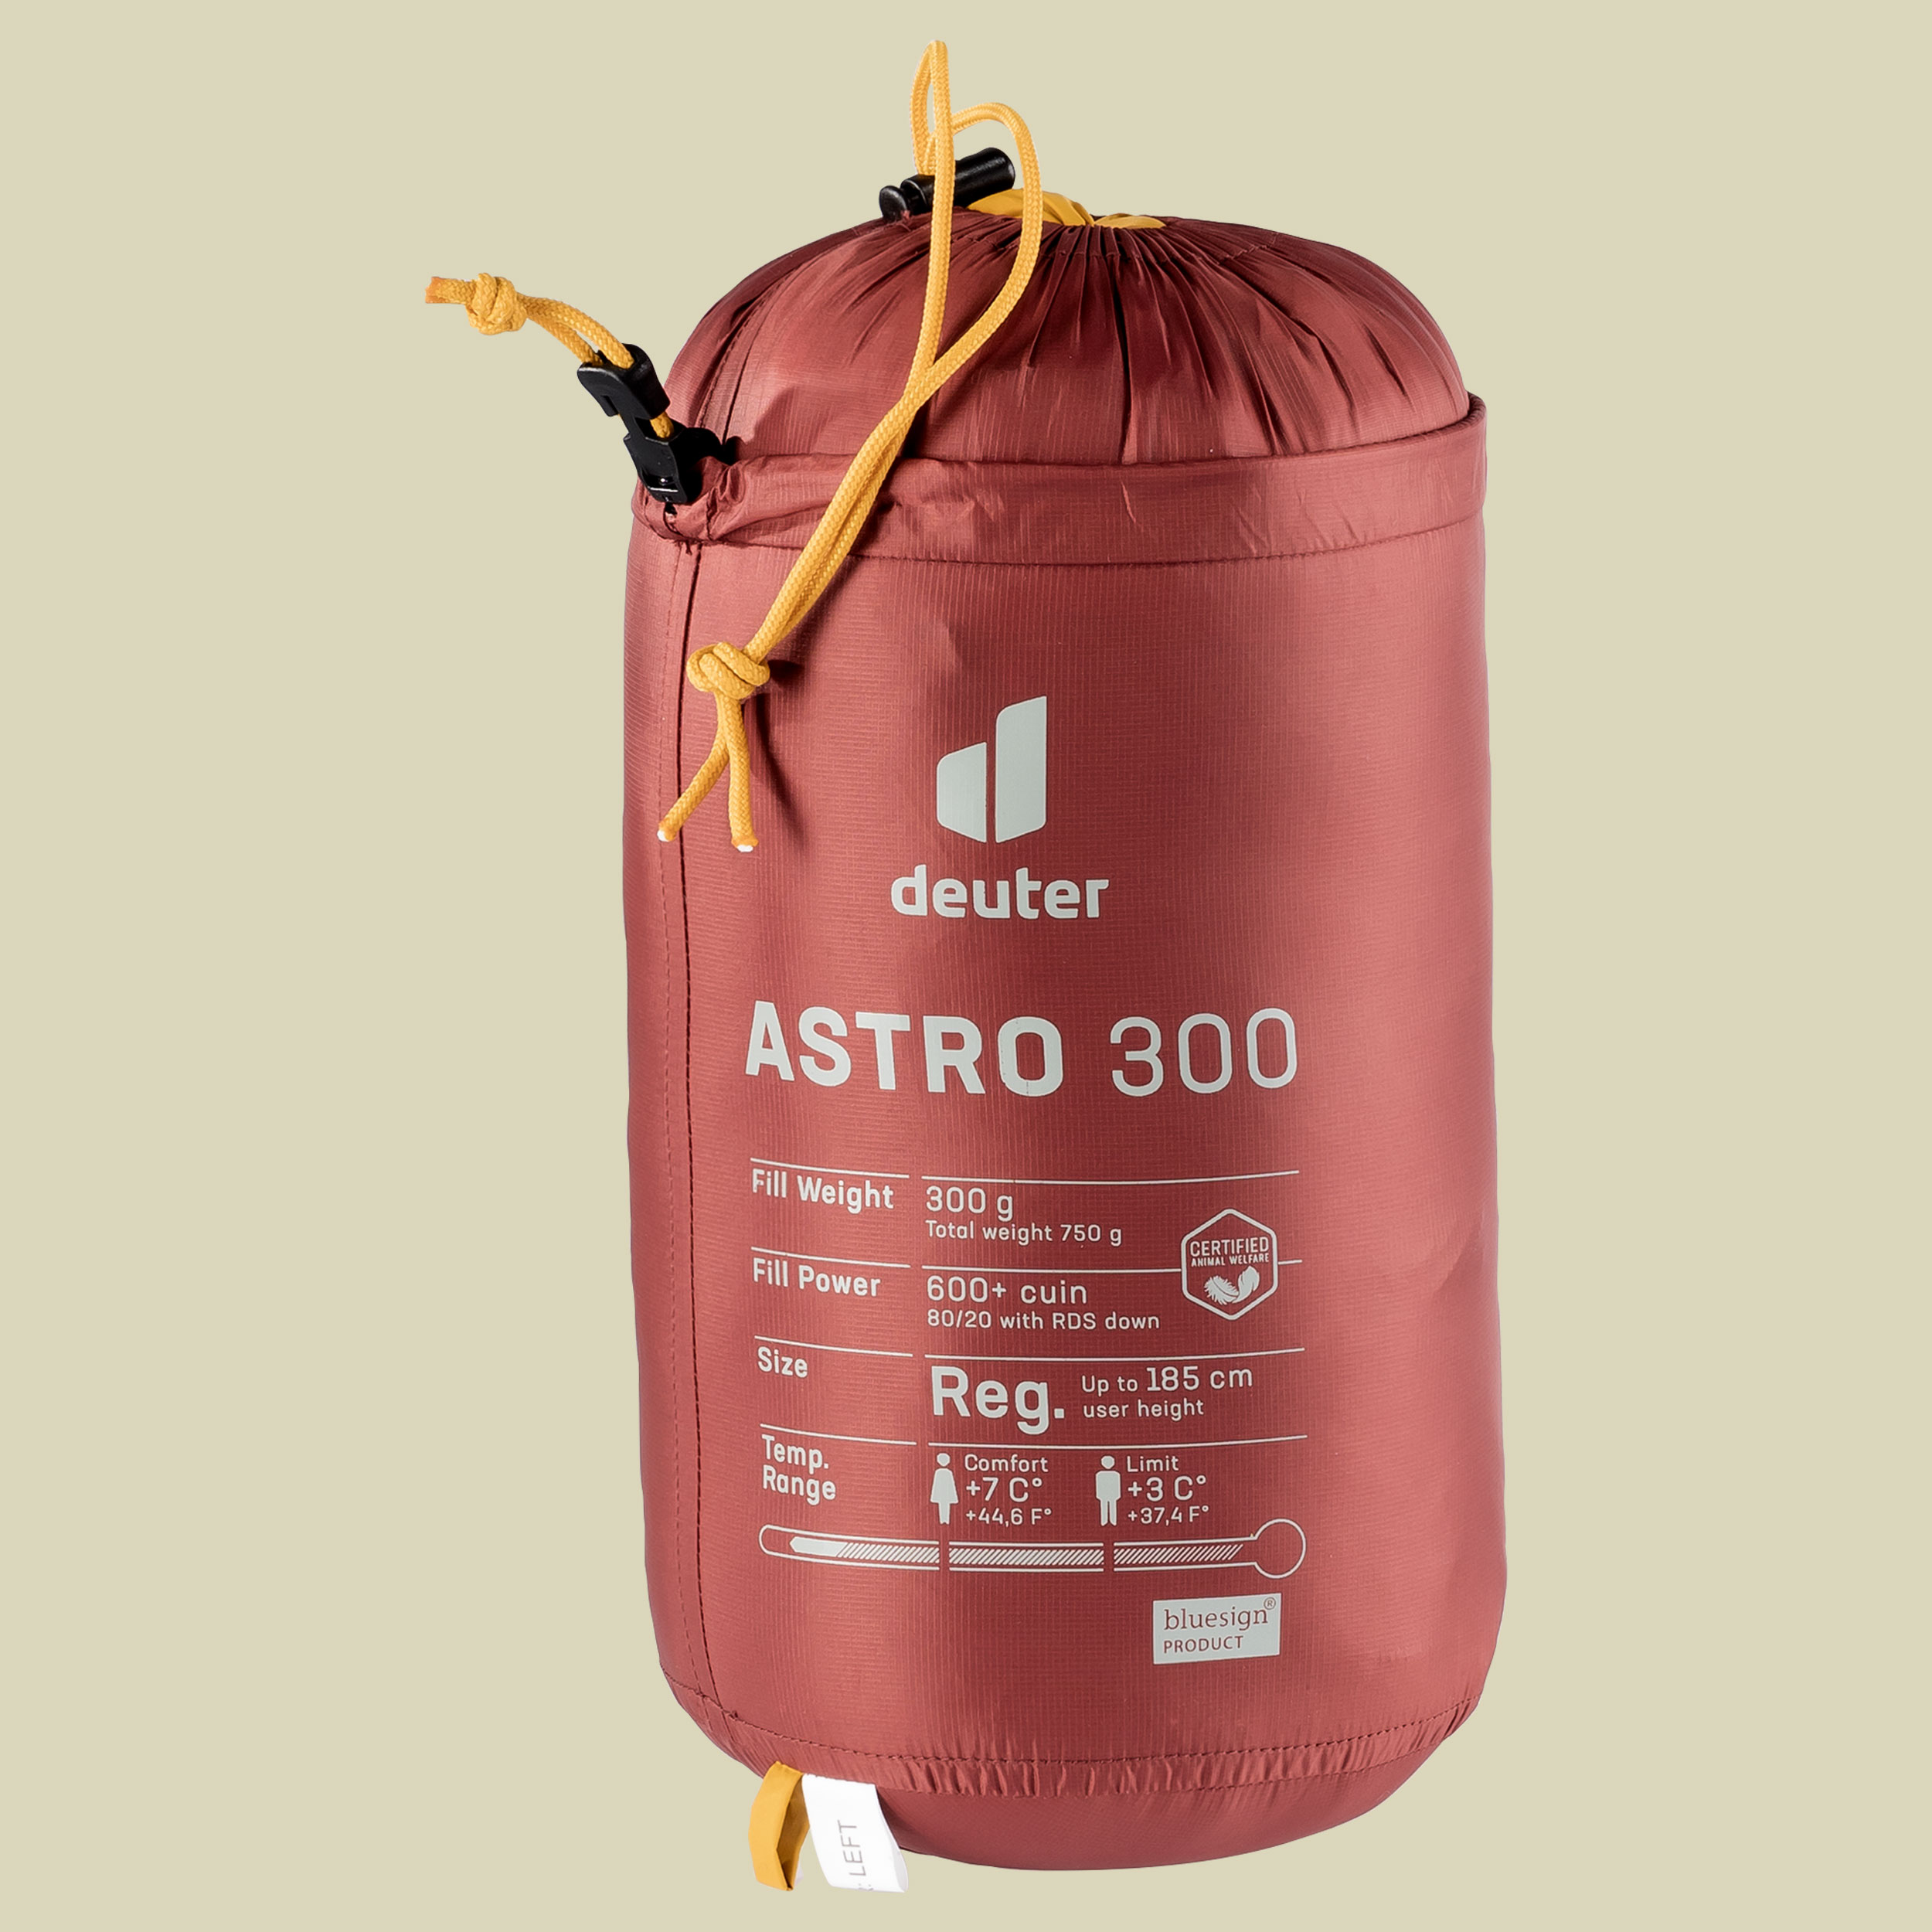 Astro 300